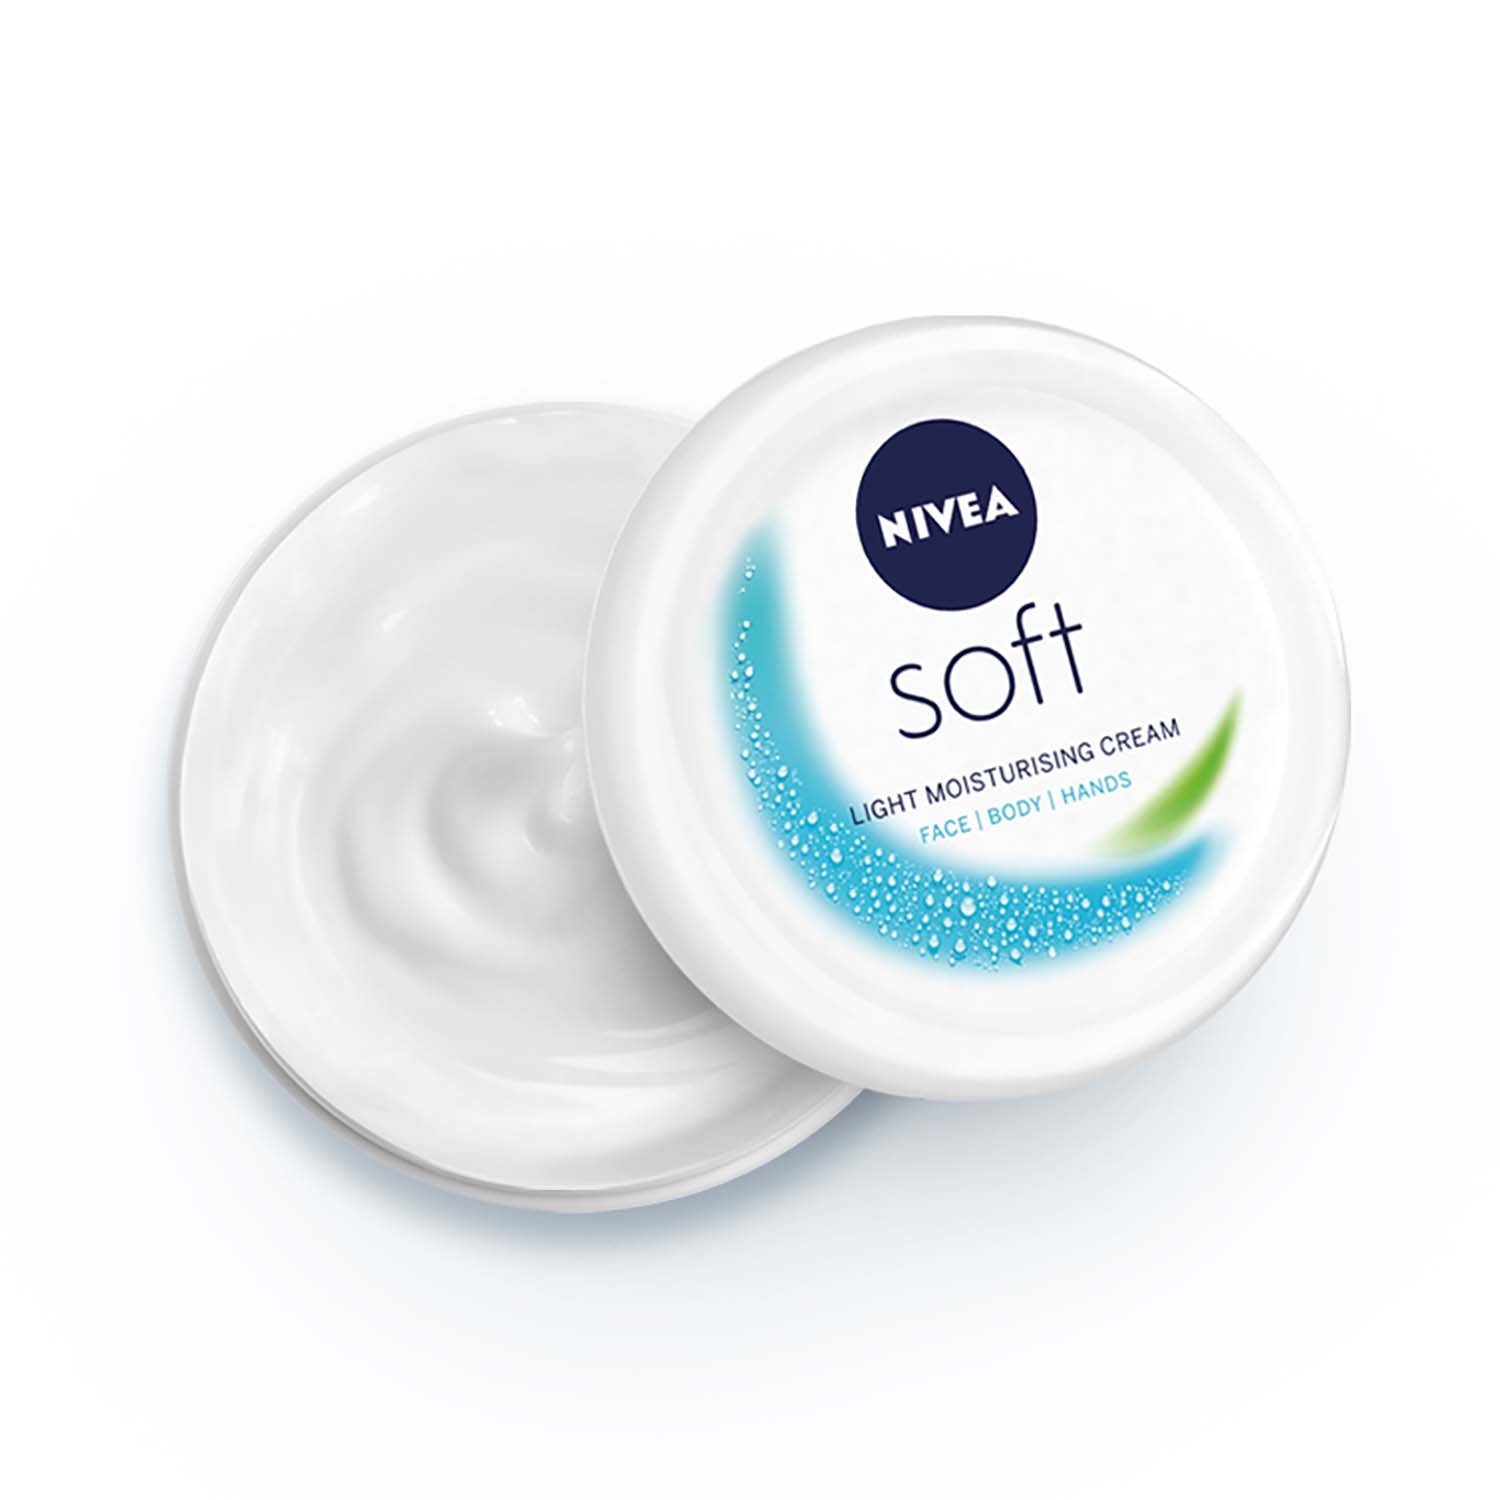 Nivea Soft Light Moisturizer Cream (200ml)